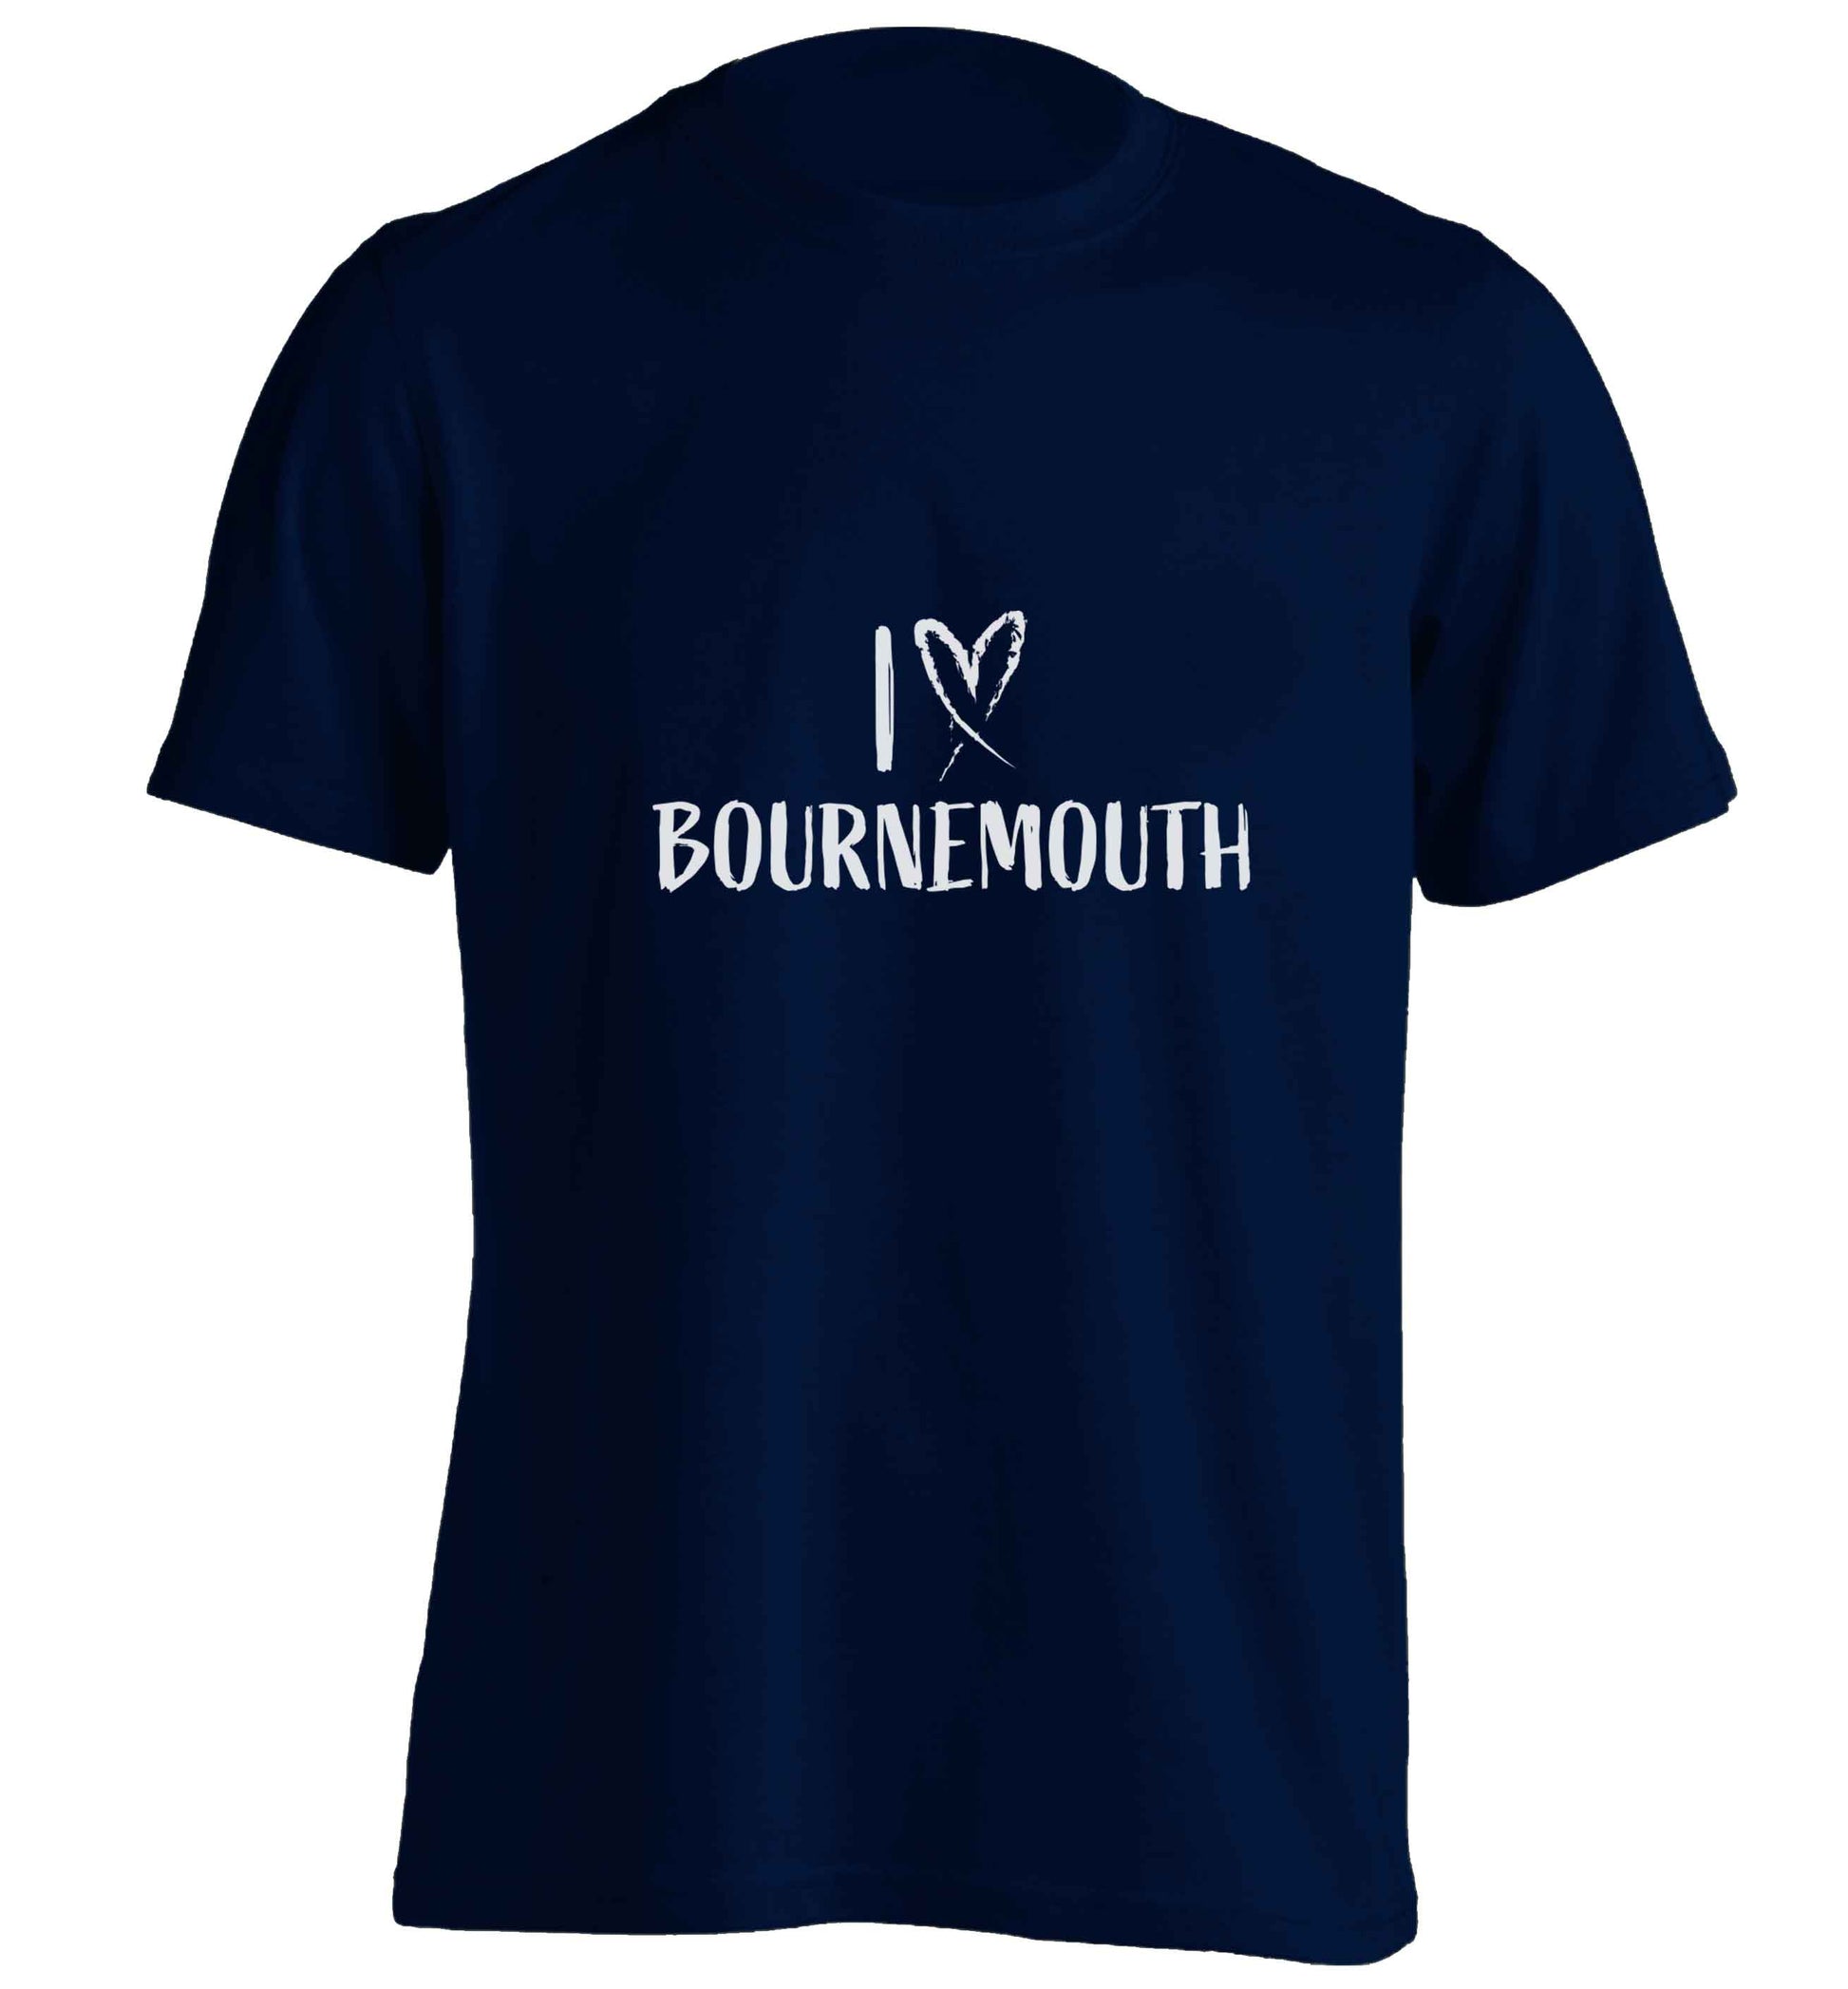 I love Bournemouth adults unisex navy Tshirt 2XL